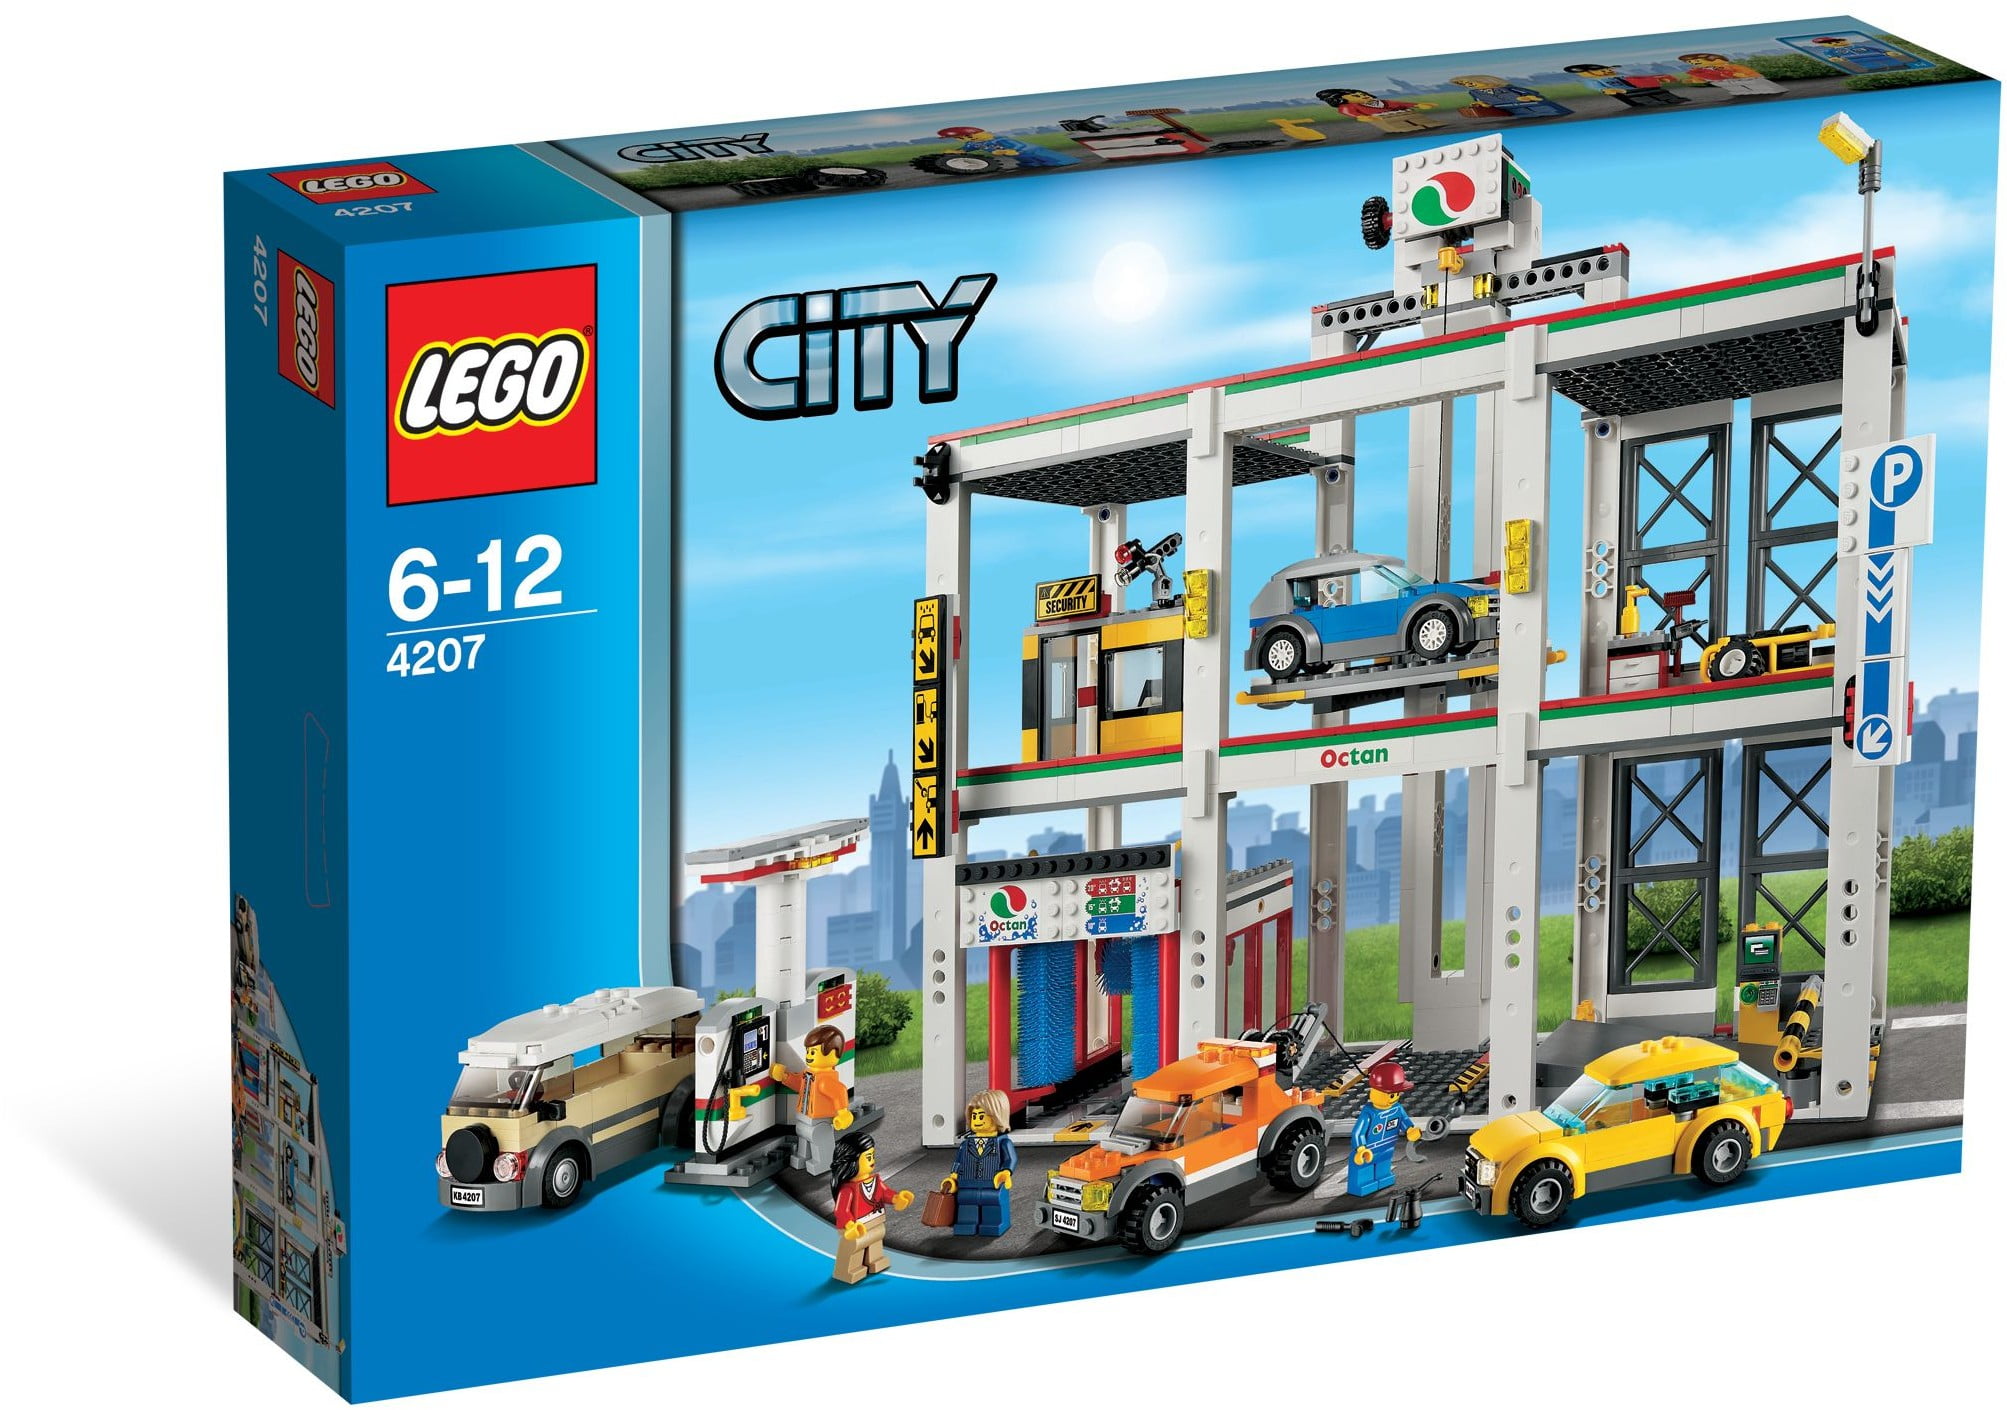 Adding Trains to the LEGO City! Room Rebuild Part 12 